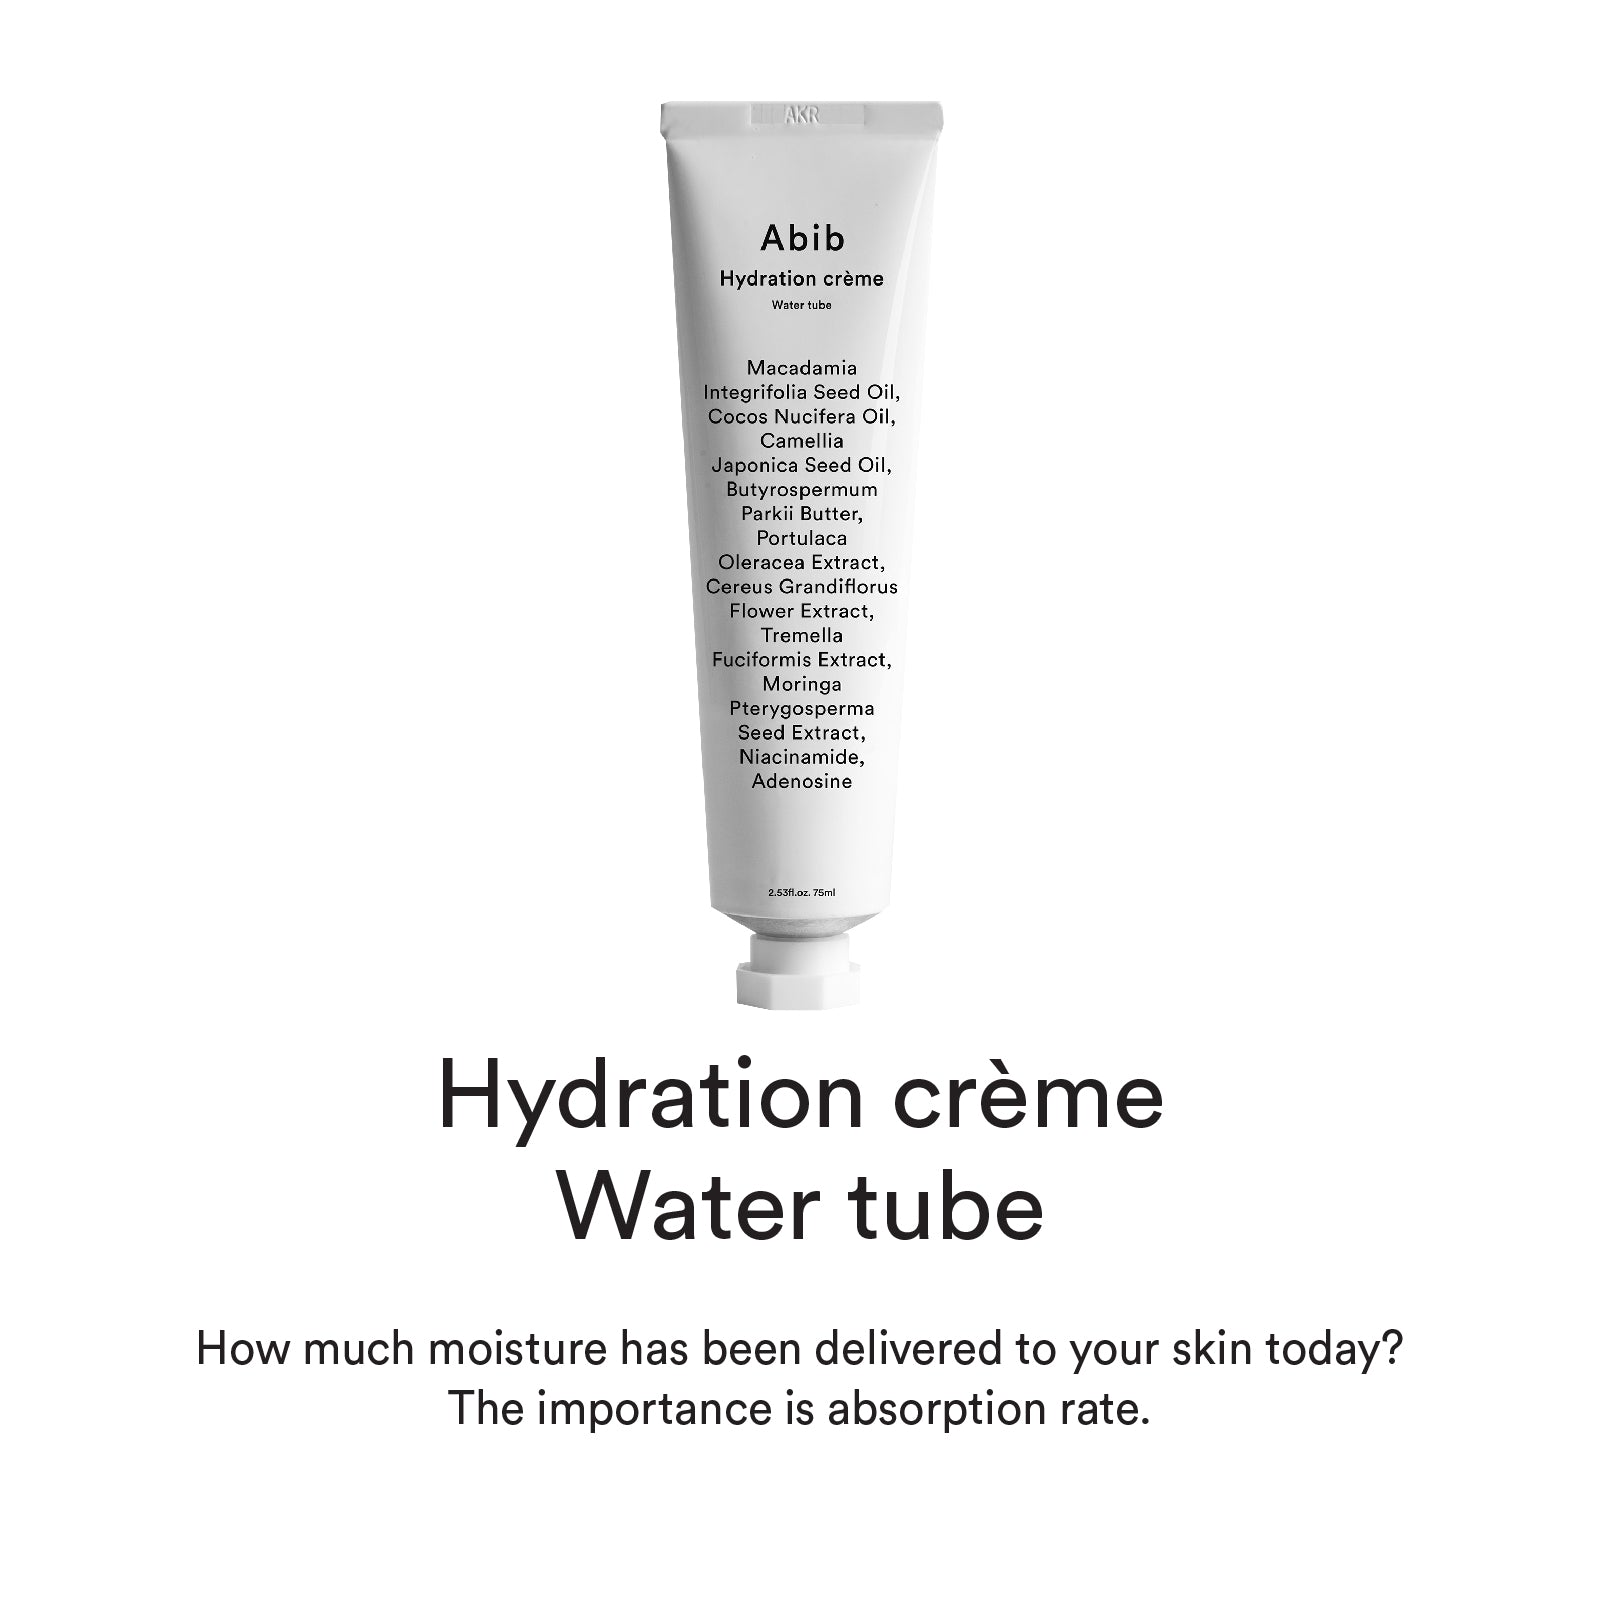 Water tube